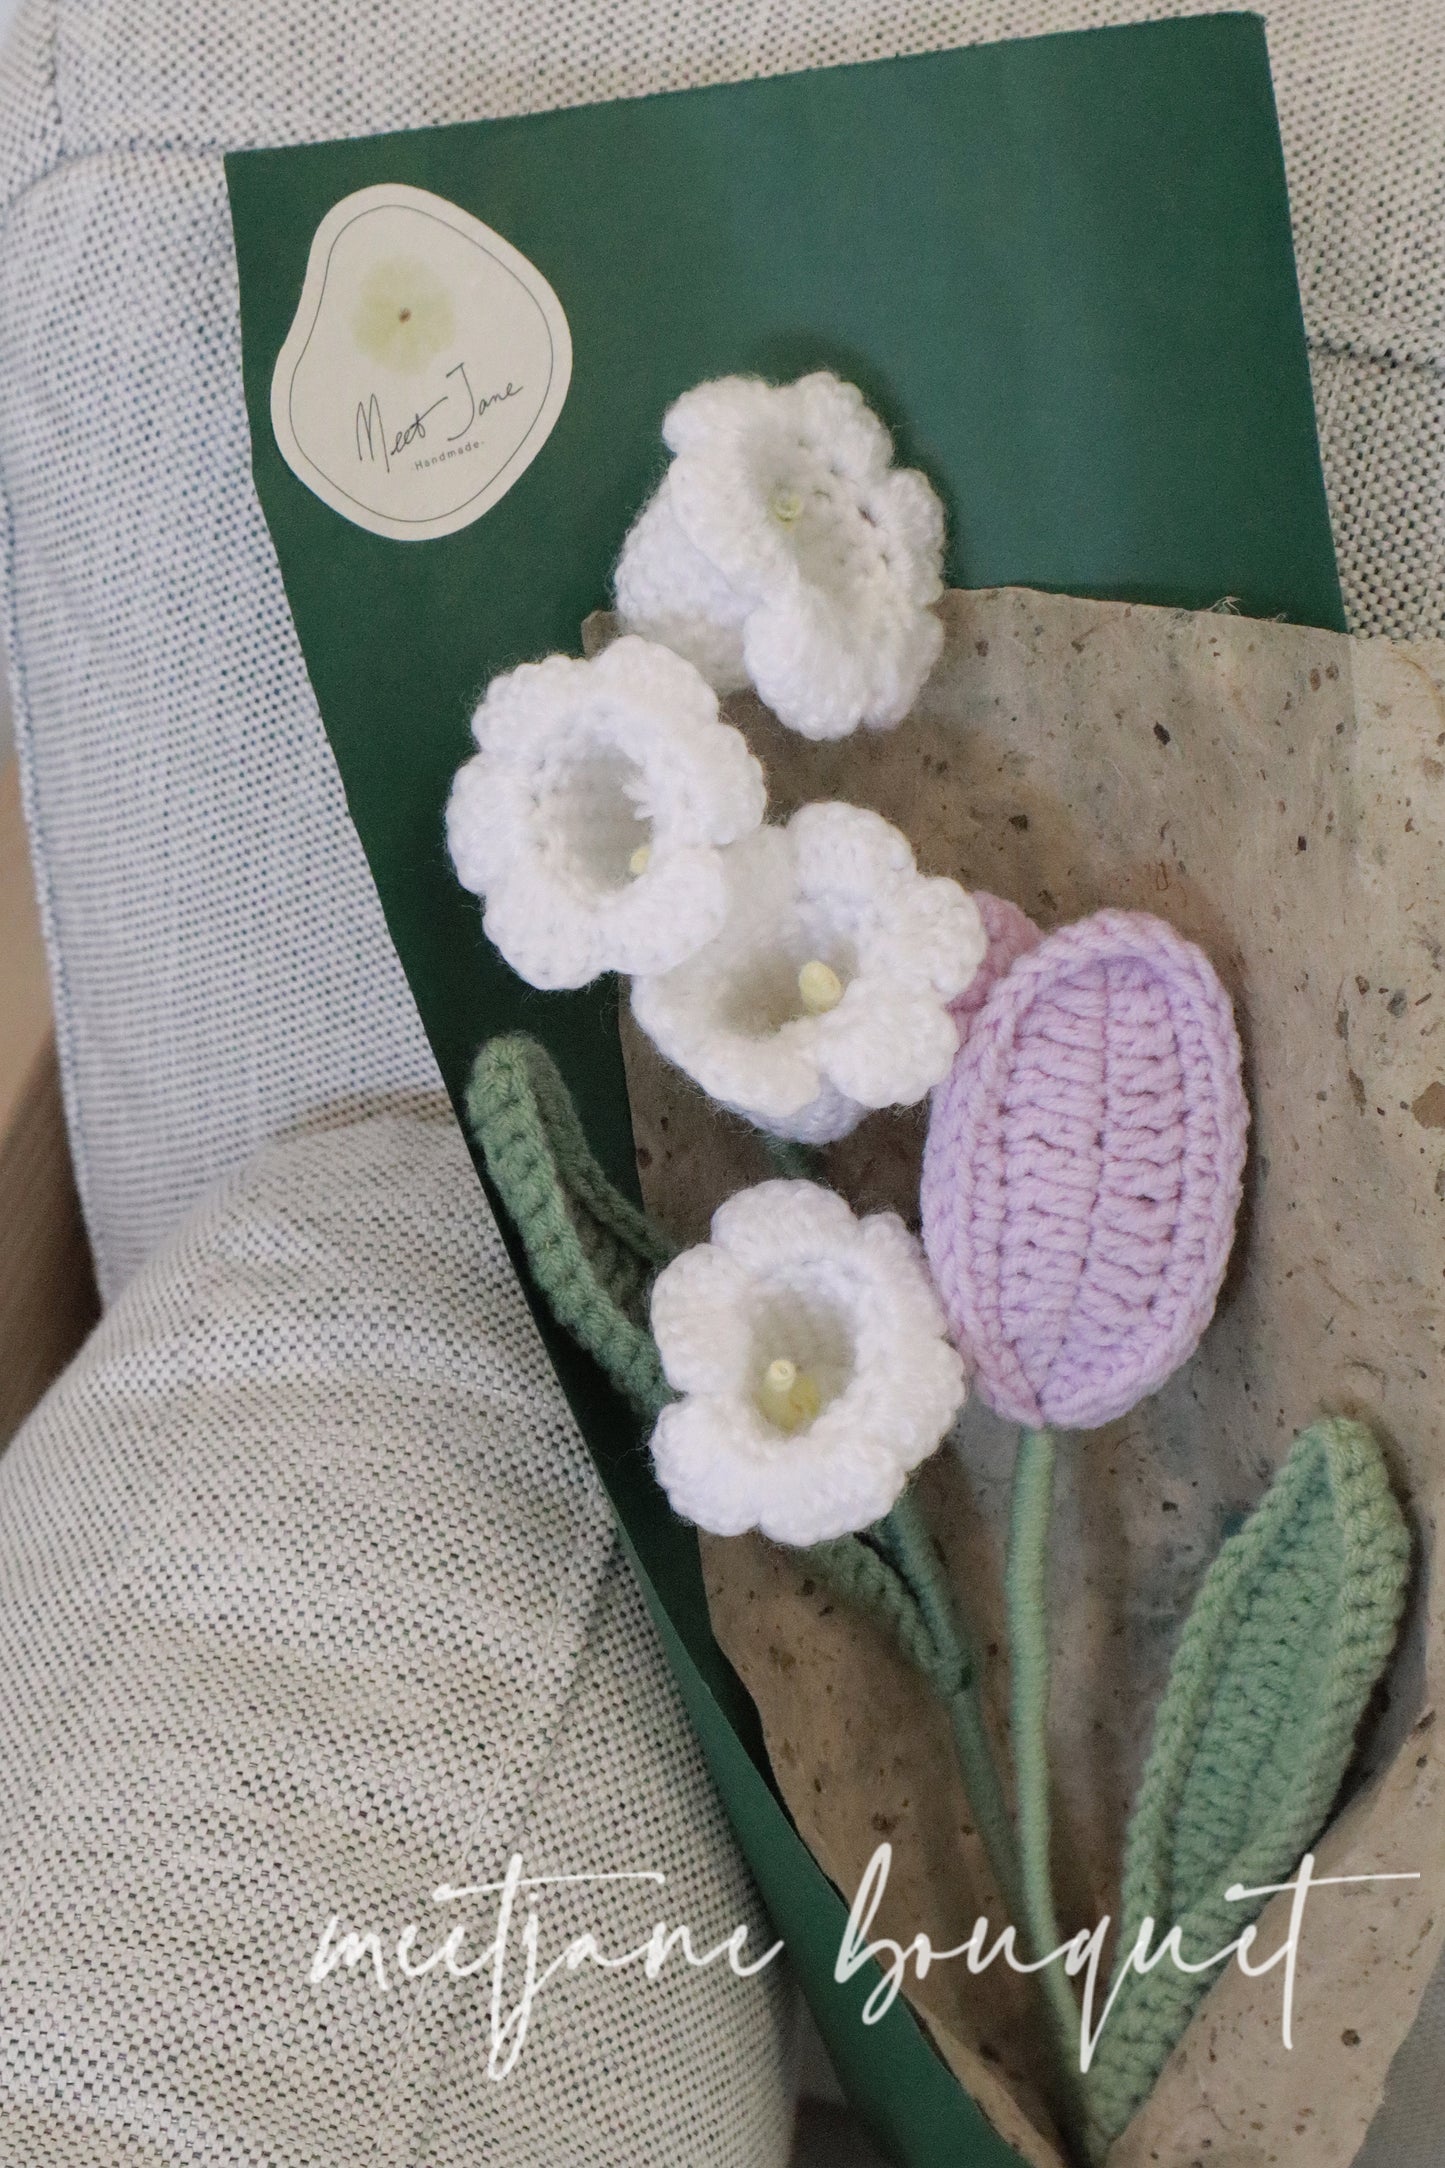 Meetjane Bouquet|Melbourne handmade |Lily of the valley + tulip